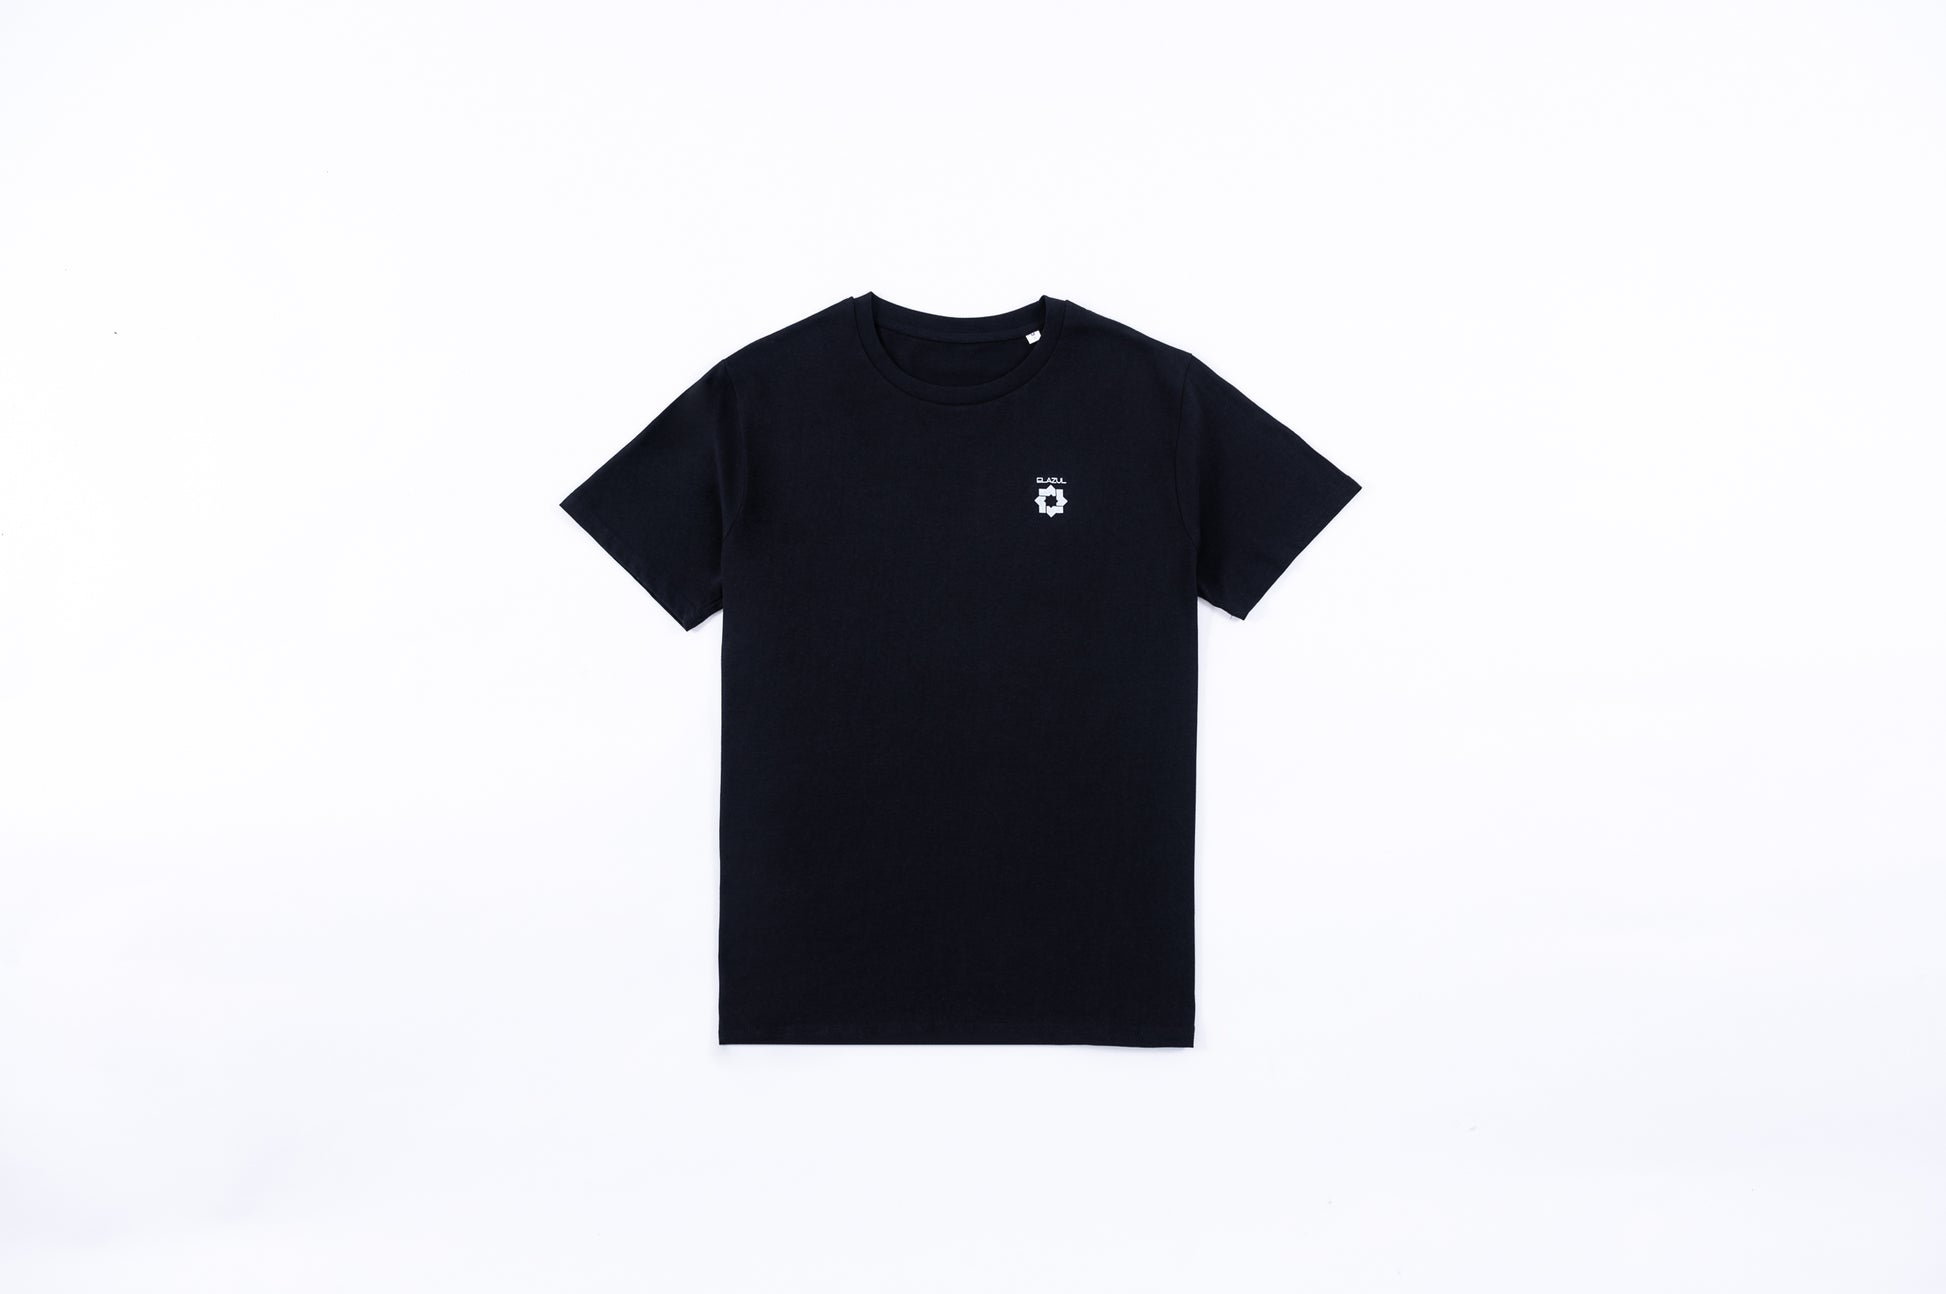 Logo negro en pecho sobre camiseta de manga corta unisex color negro